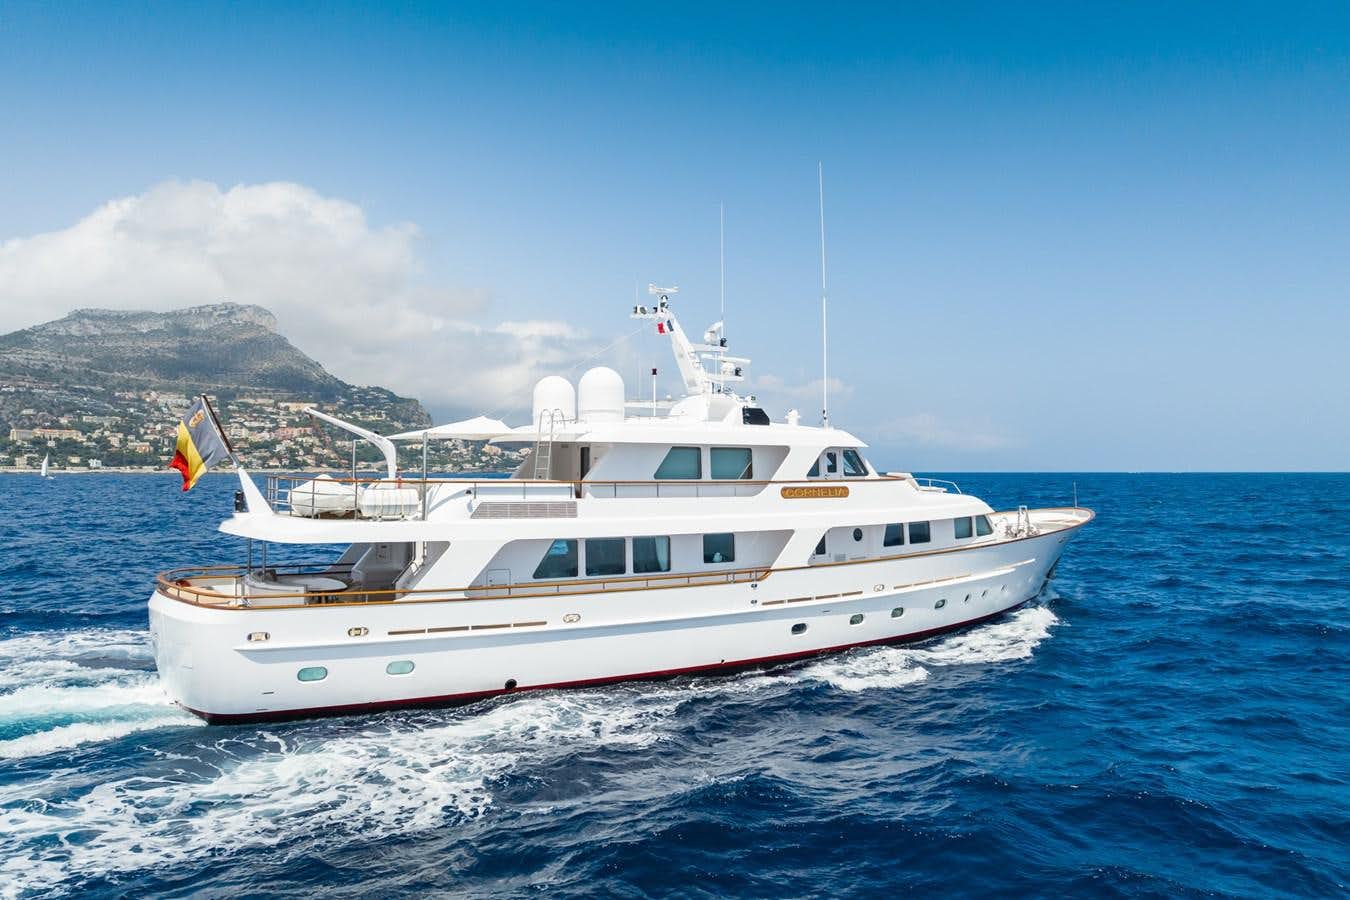 Cornelia
Yacht for Sale